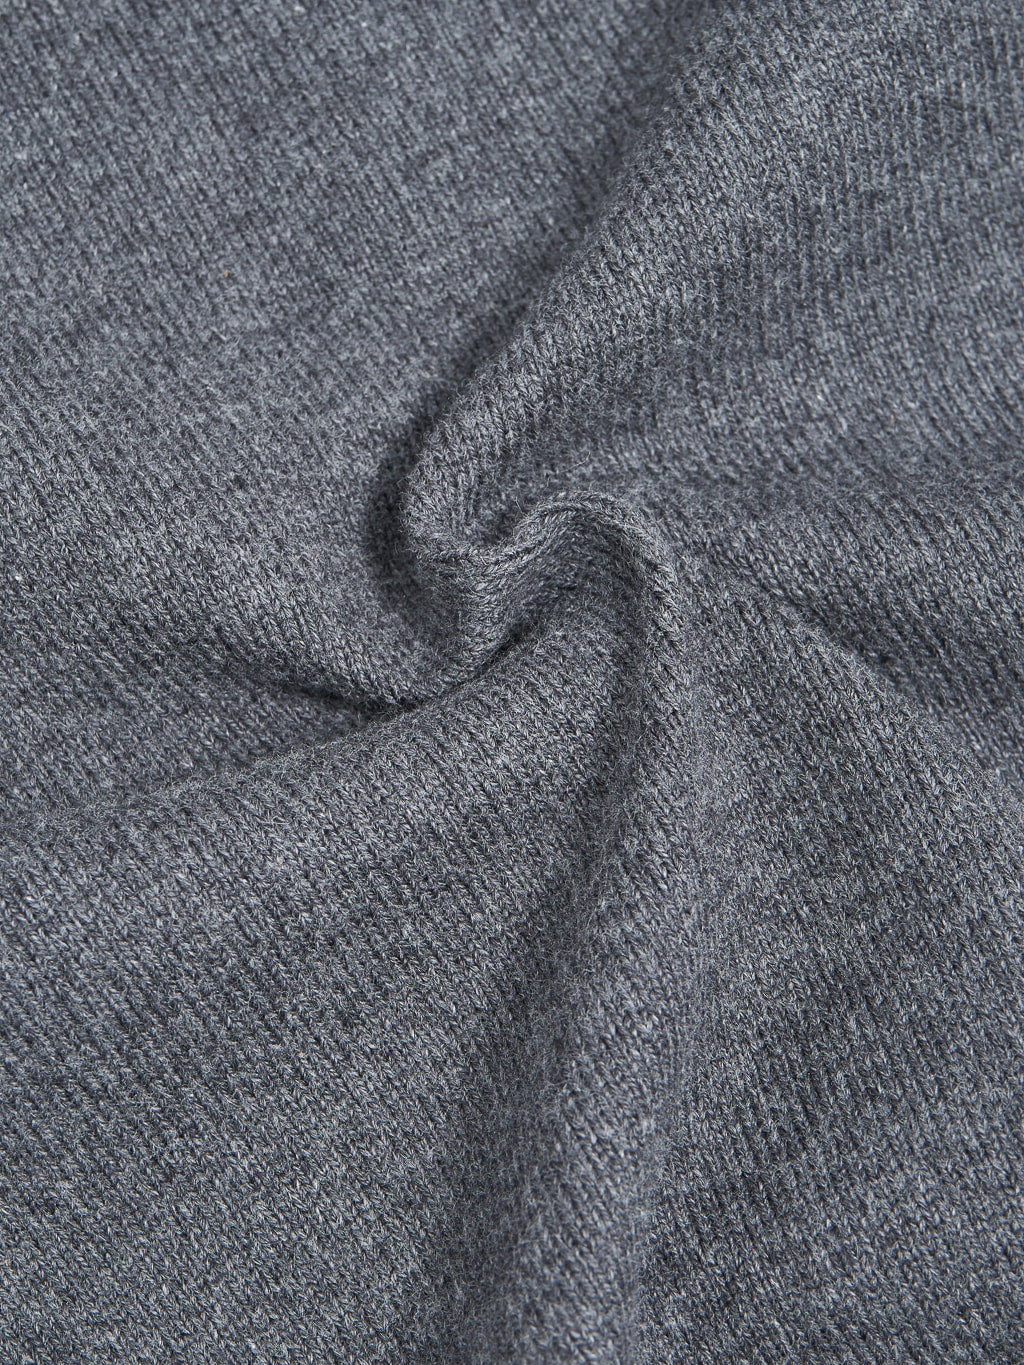 Wonder Looper Double Heavyweight Crewneck Tshirt charcoal cotton fabric texture